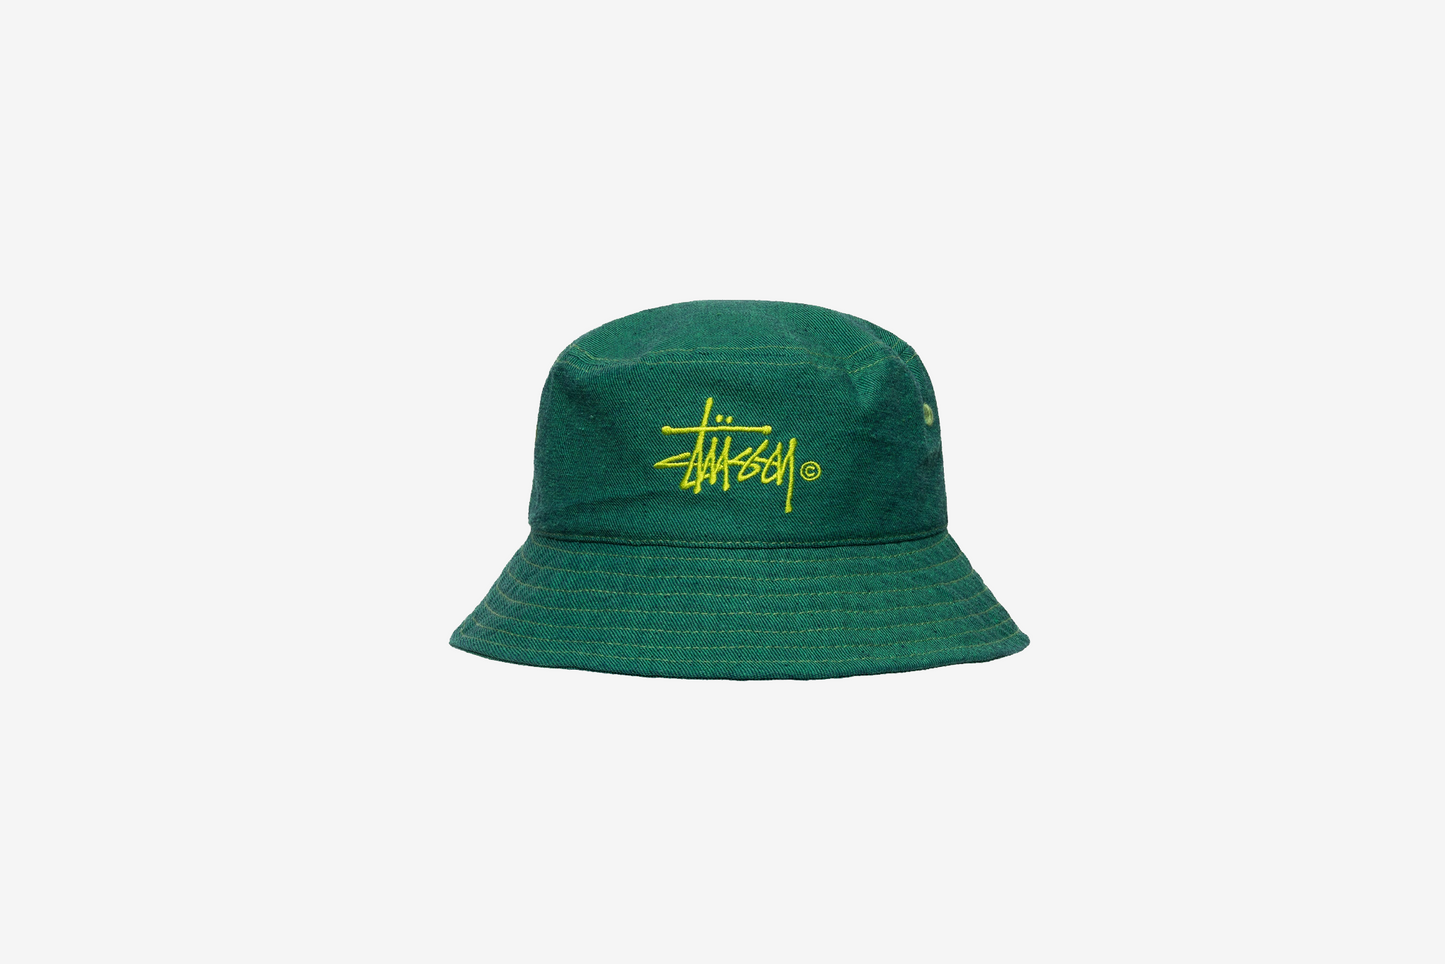 Stussy "Copyright Bucket Hat" - Green